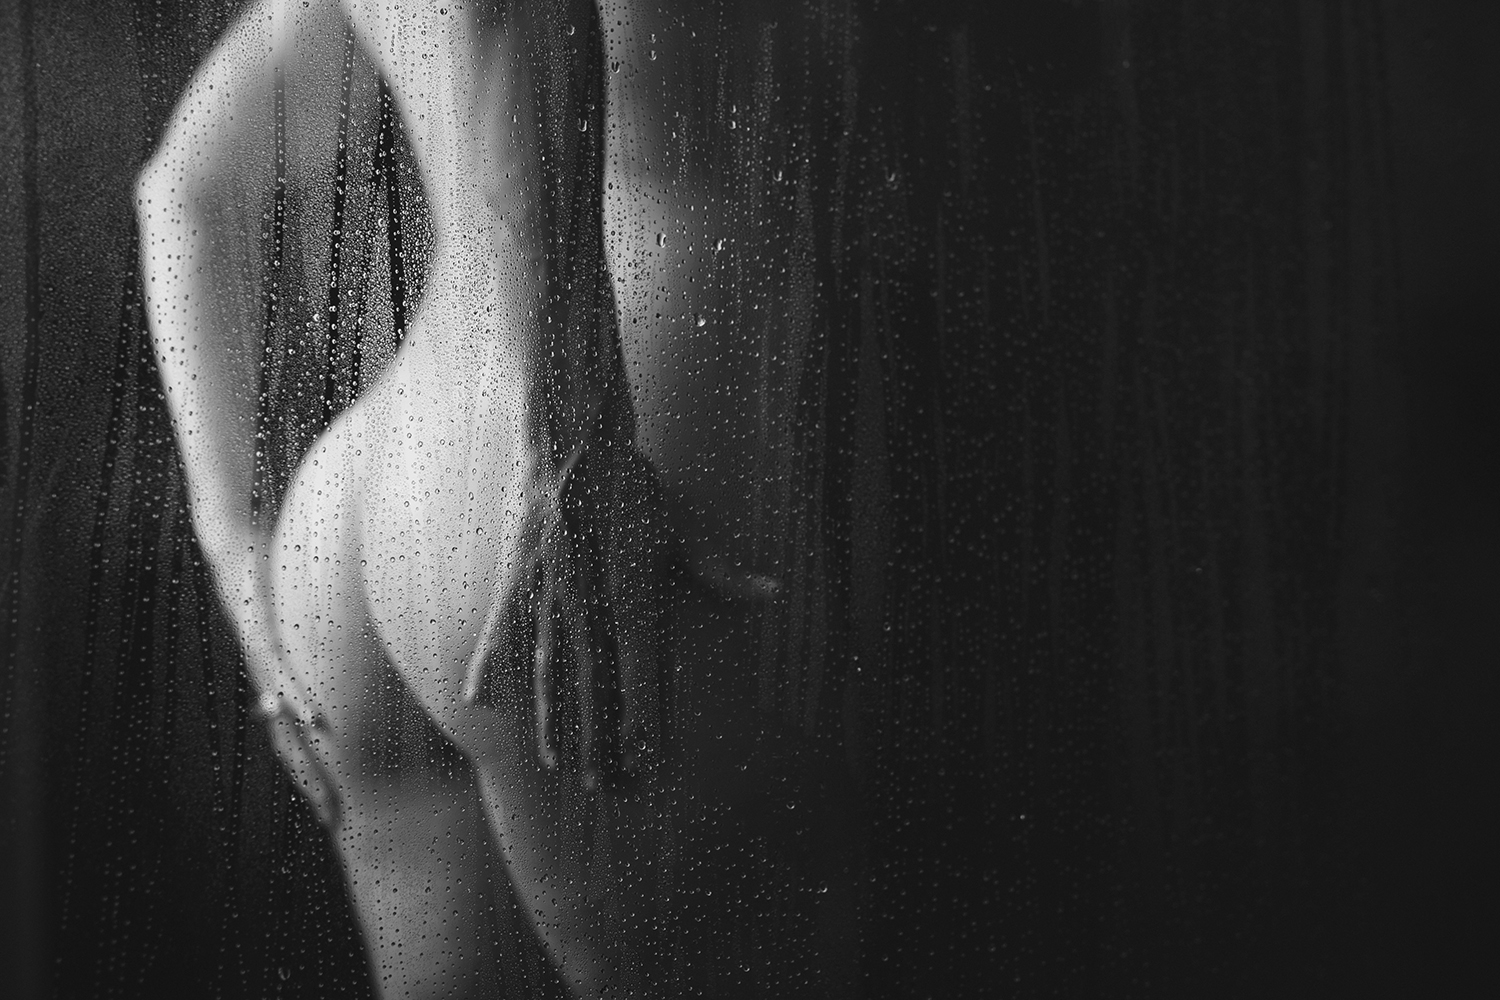 atx-austin-boudoir-shower-artistic-kbb-08.jpg